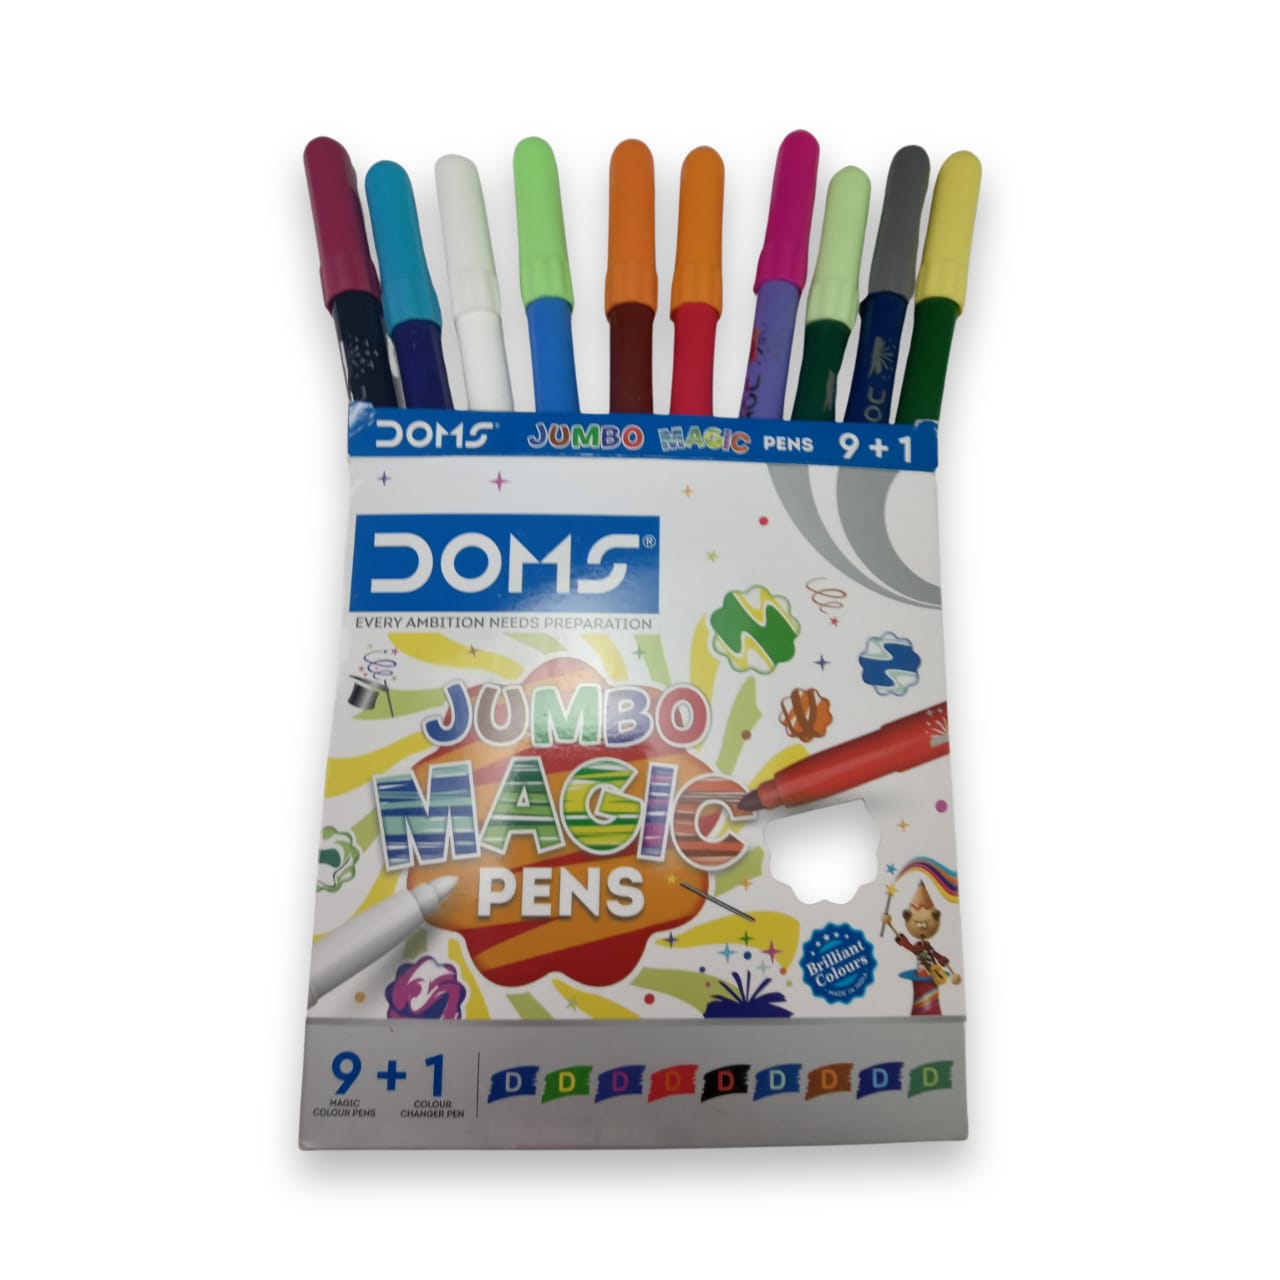 DOMS Magic Pens, 8 Shades + 2 Colour Changing pens) Sketch Pens